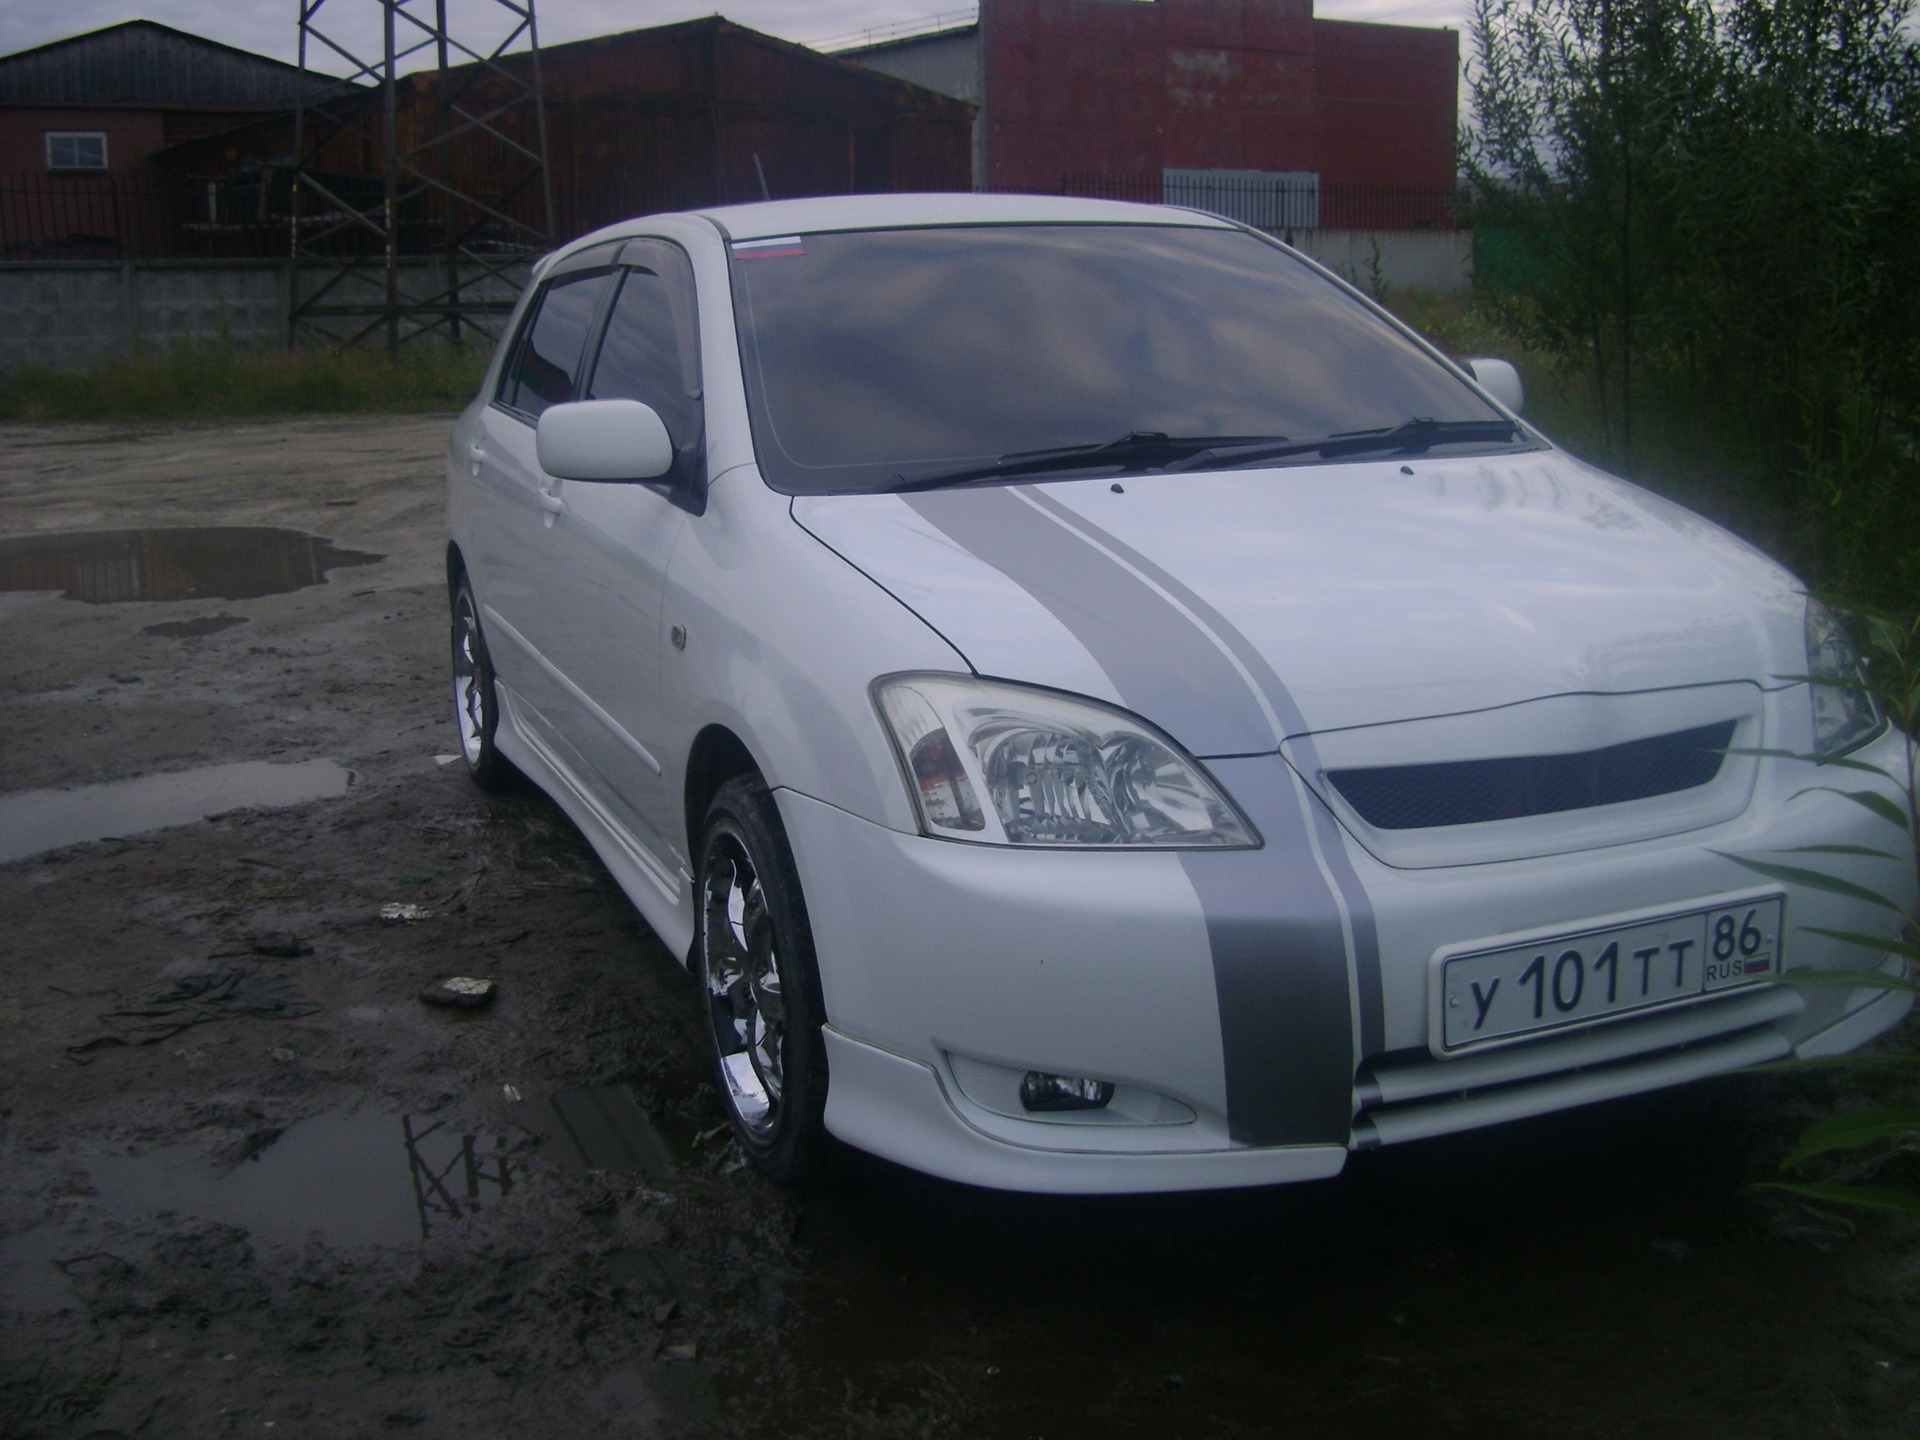    Toyota Corolla Runx 99 2003